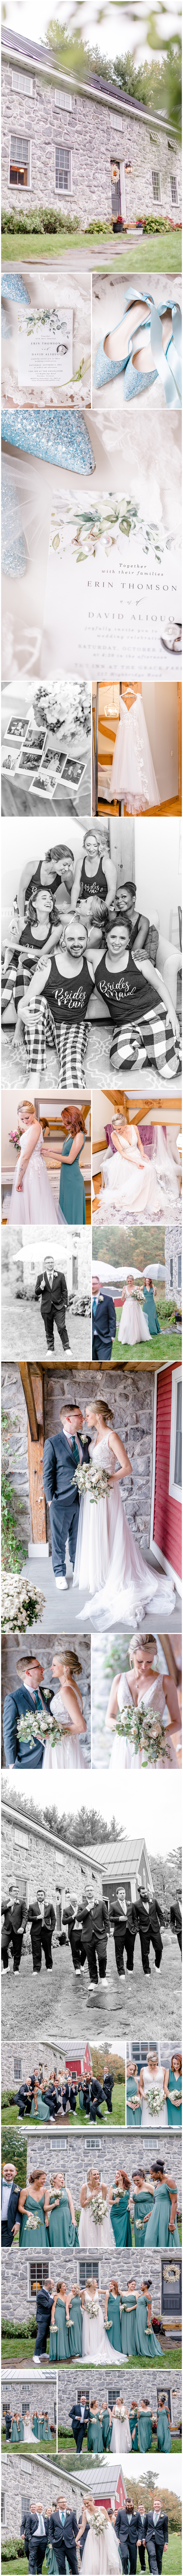 Vermont wedding photographs 